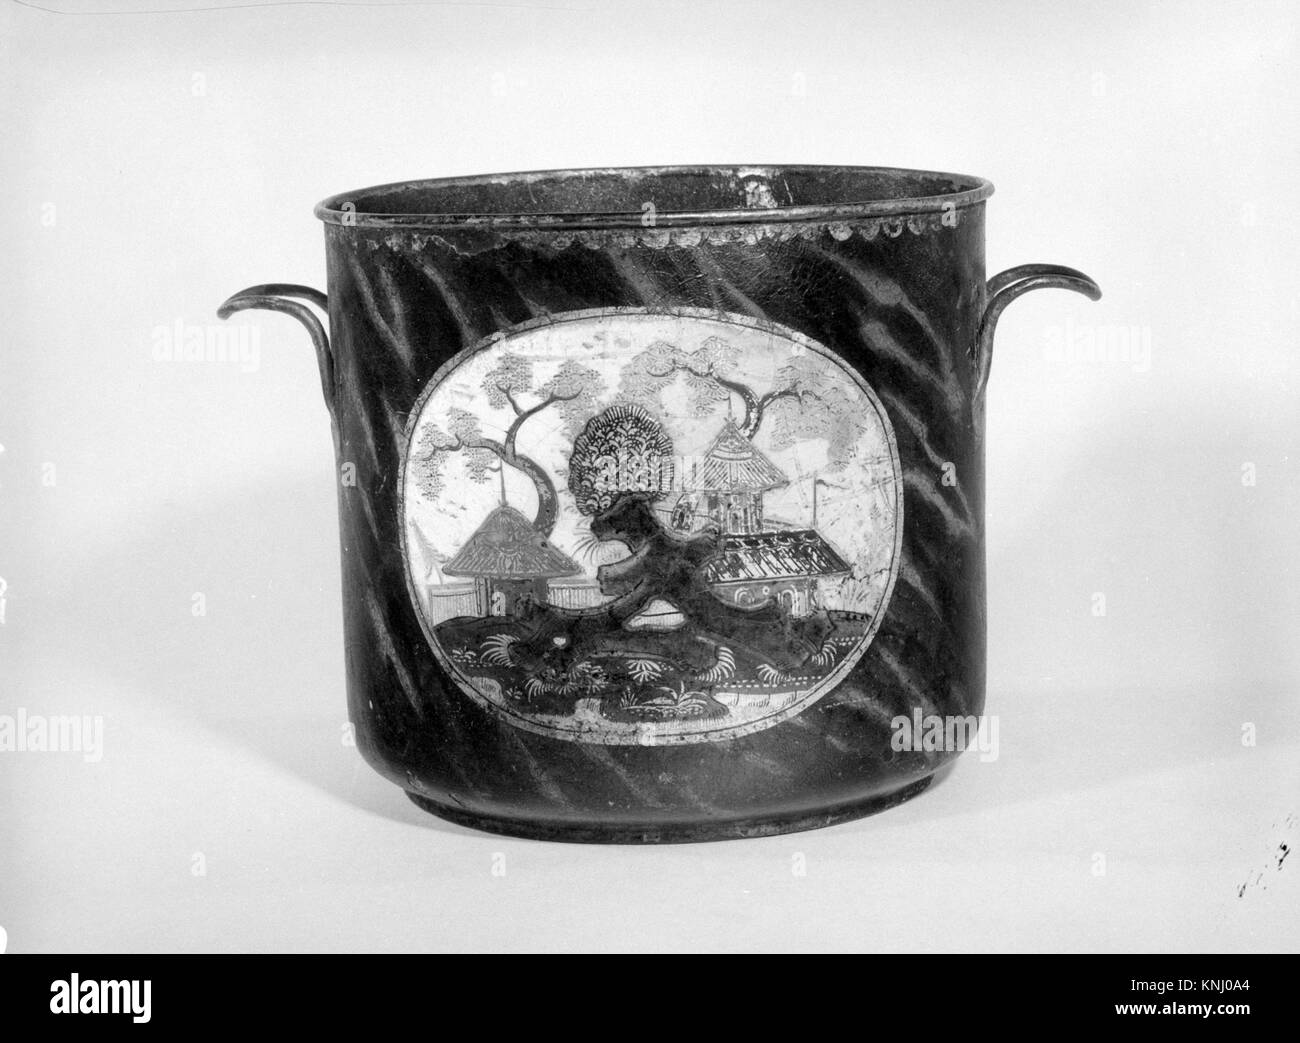 Cachepot MET 167303 1086 Cachepot, 1700?1800, Probably tin, 6 9/16 x 9 3/4 in. (16.7 x 24.8 cm). The Metropolitan Museum of Art, New York. Rogers Fund, 1958 (58.168.1) Stock Photo